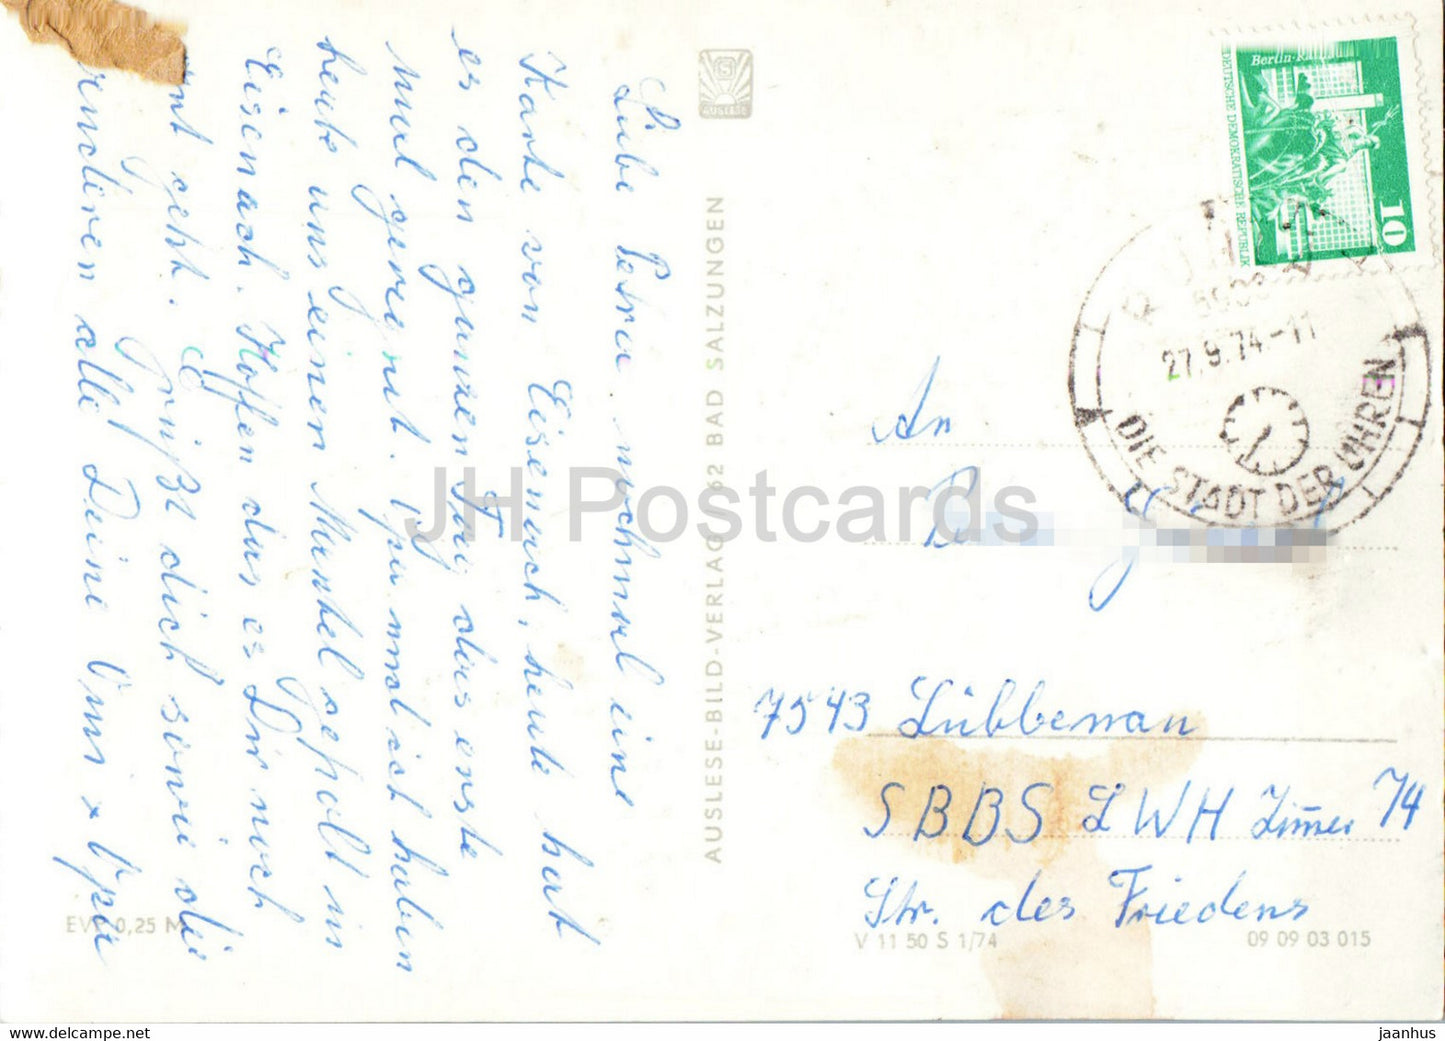 Die Wartburg bei Eisenach - castle - old postcard - 1974 - Germany DDR - used